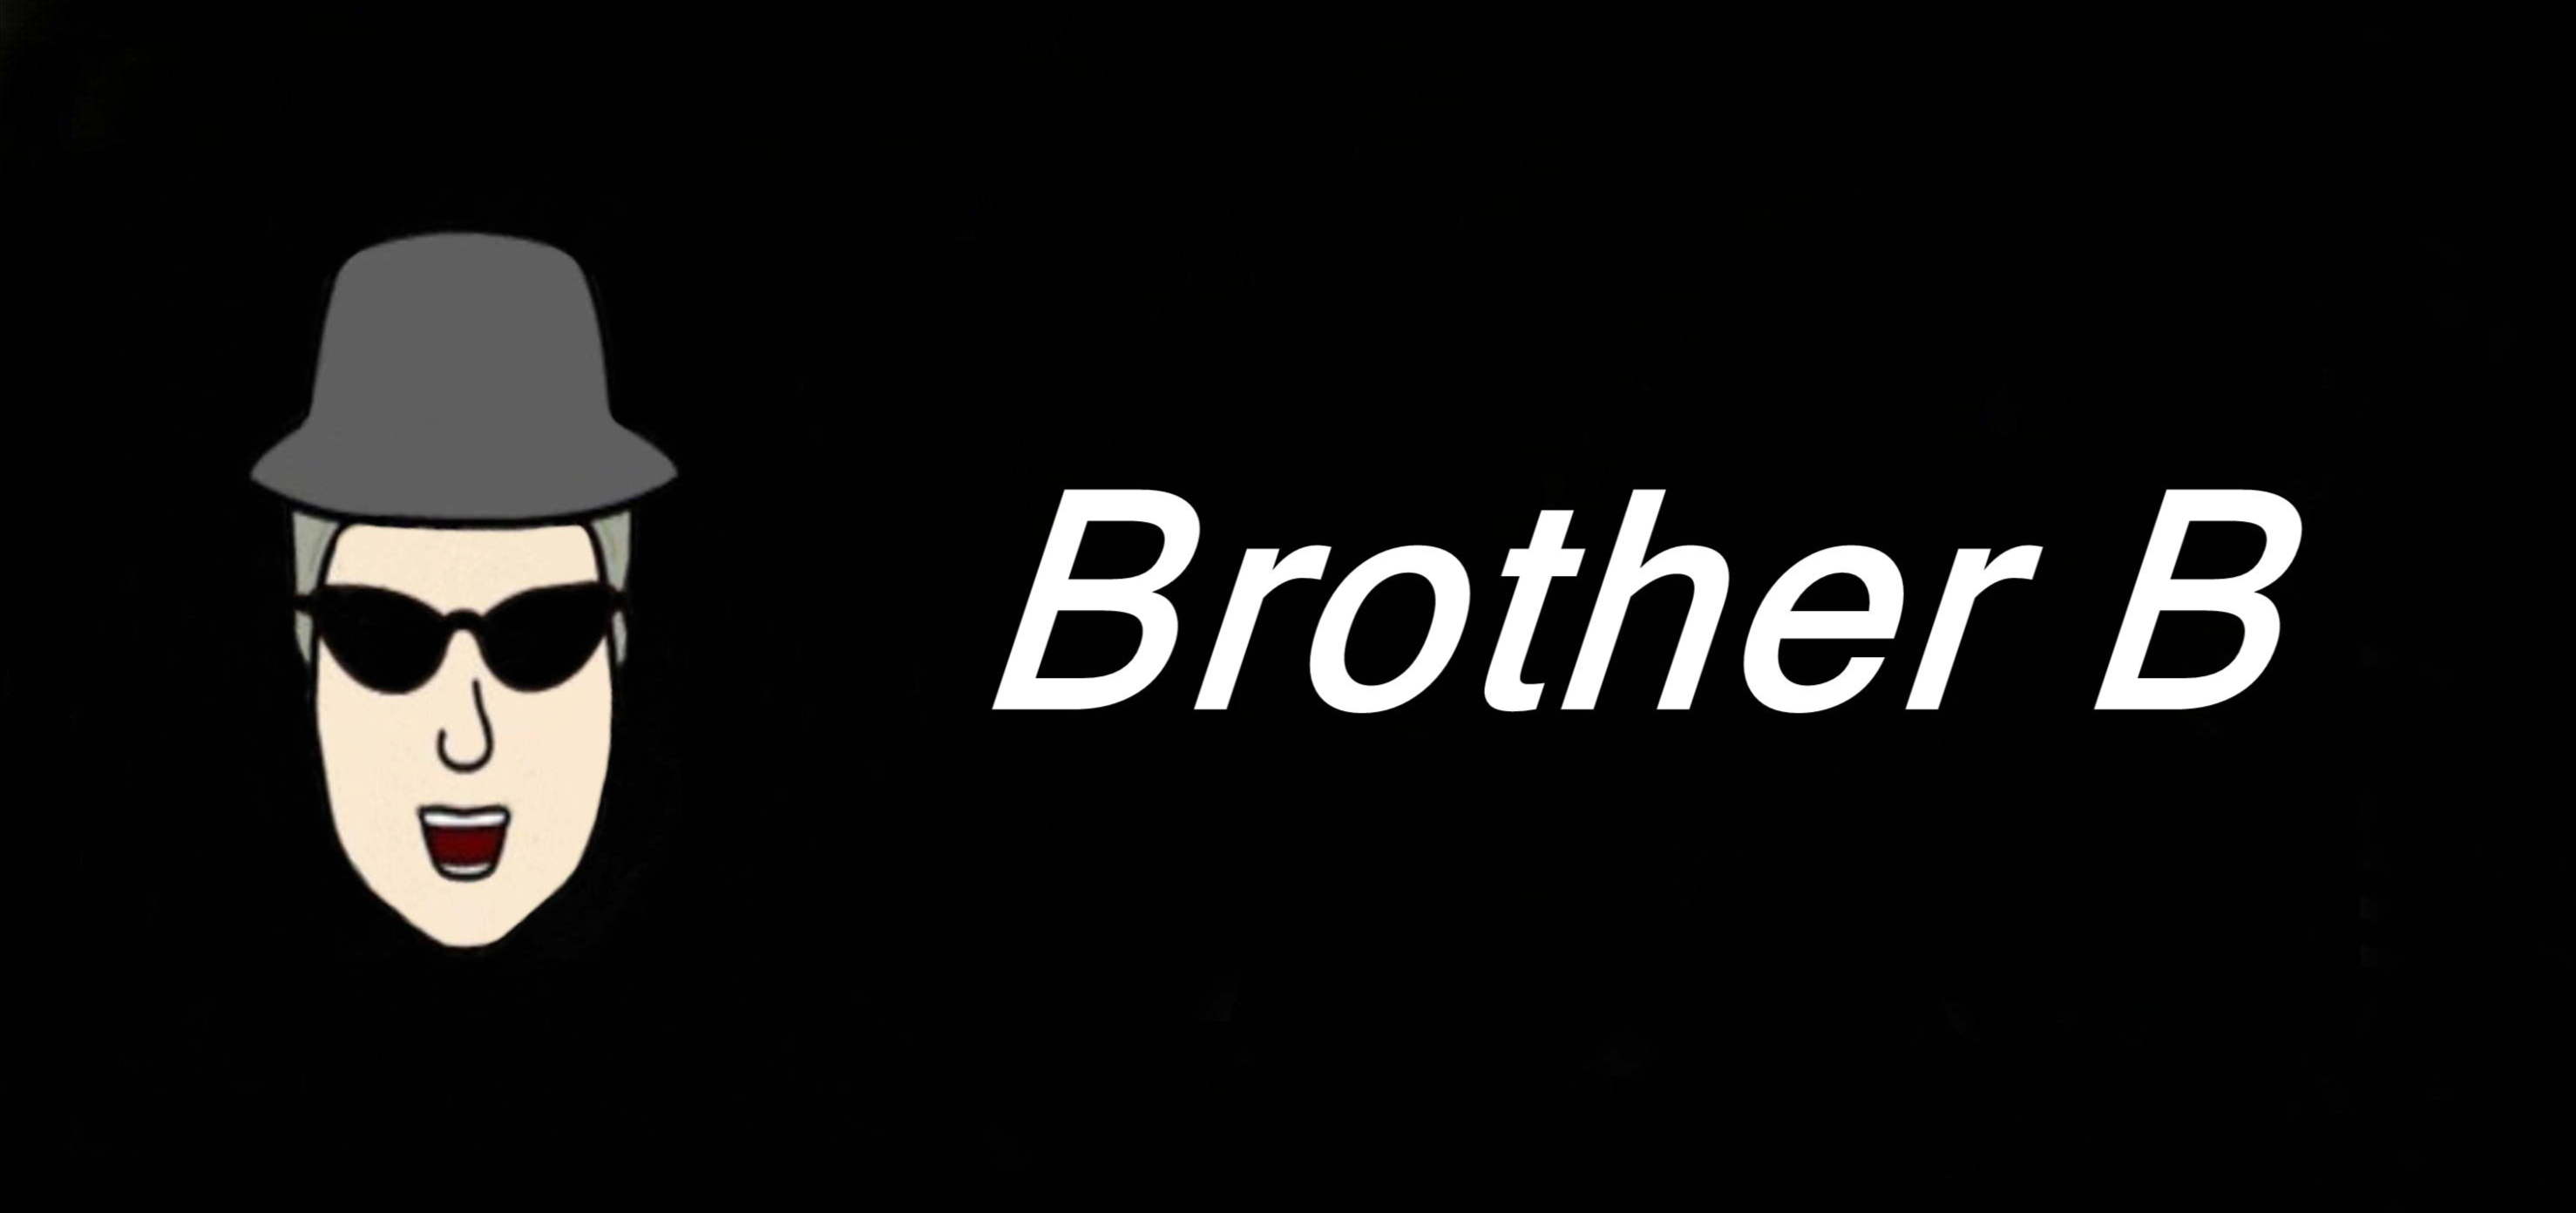 BROTHER B STEEM.jpg